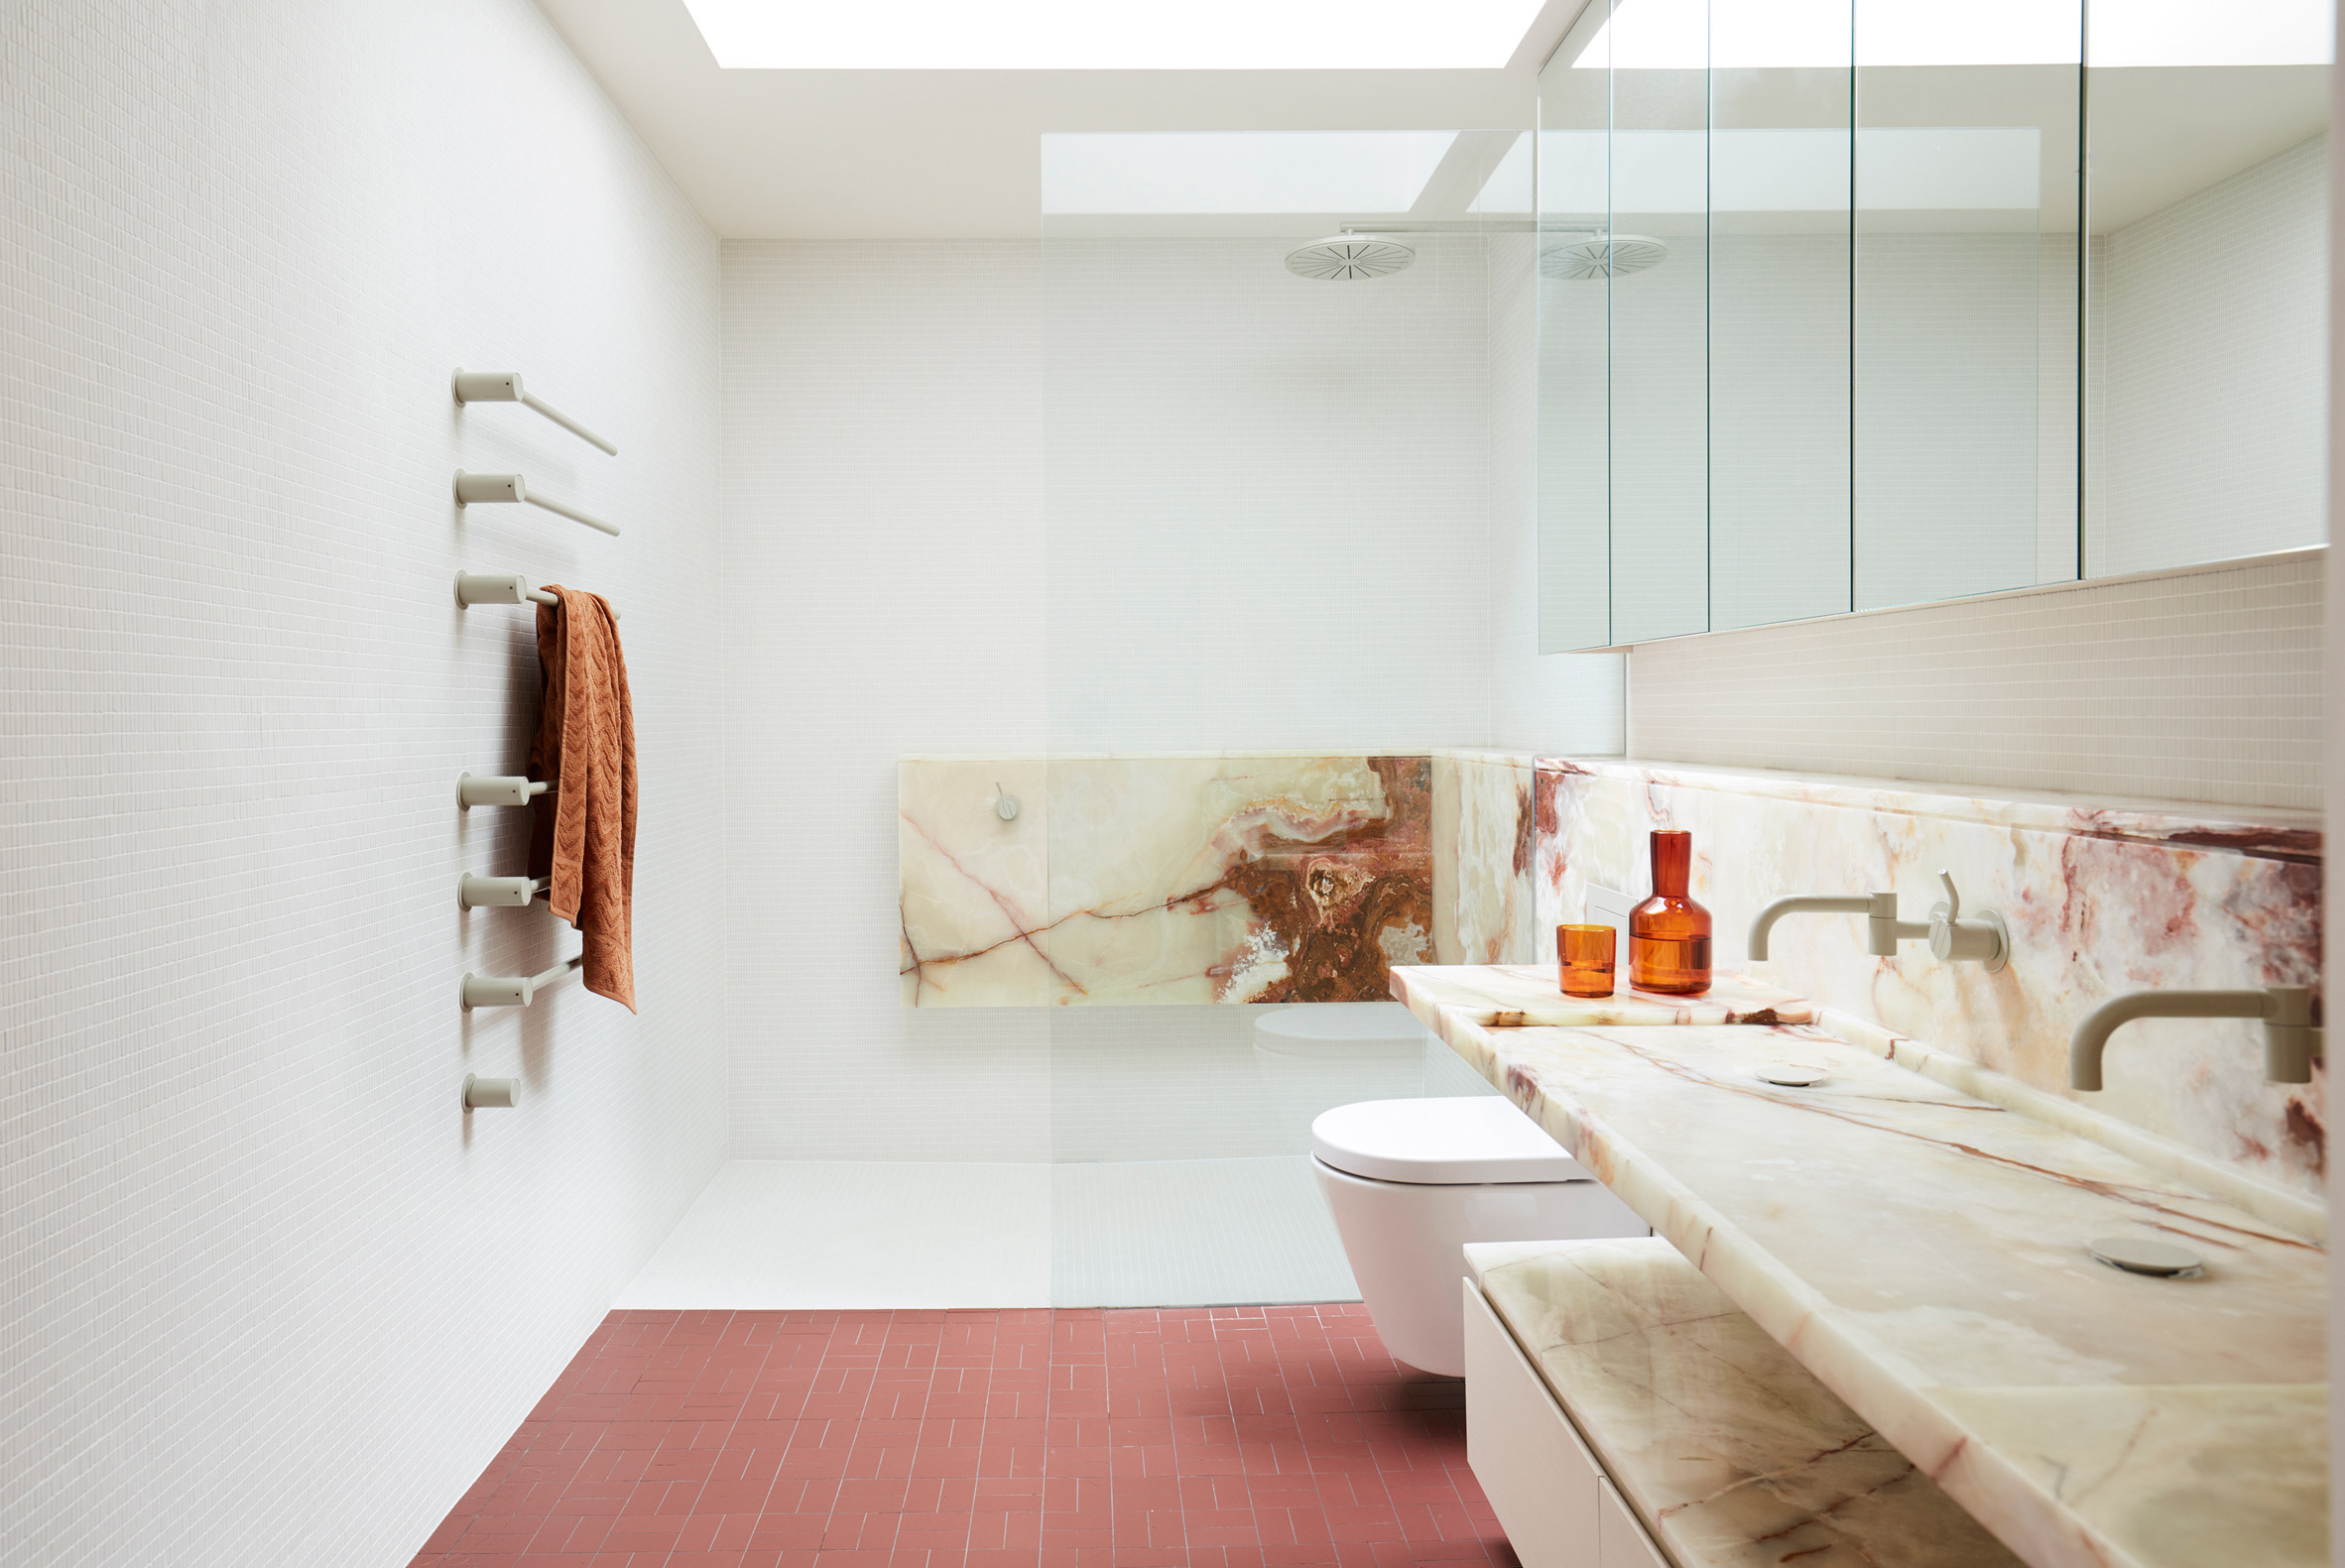 Bathroom interior of Dream Weaver penthouse with onyx surround